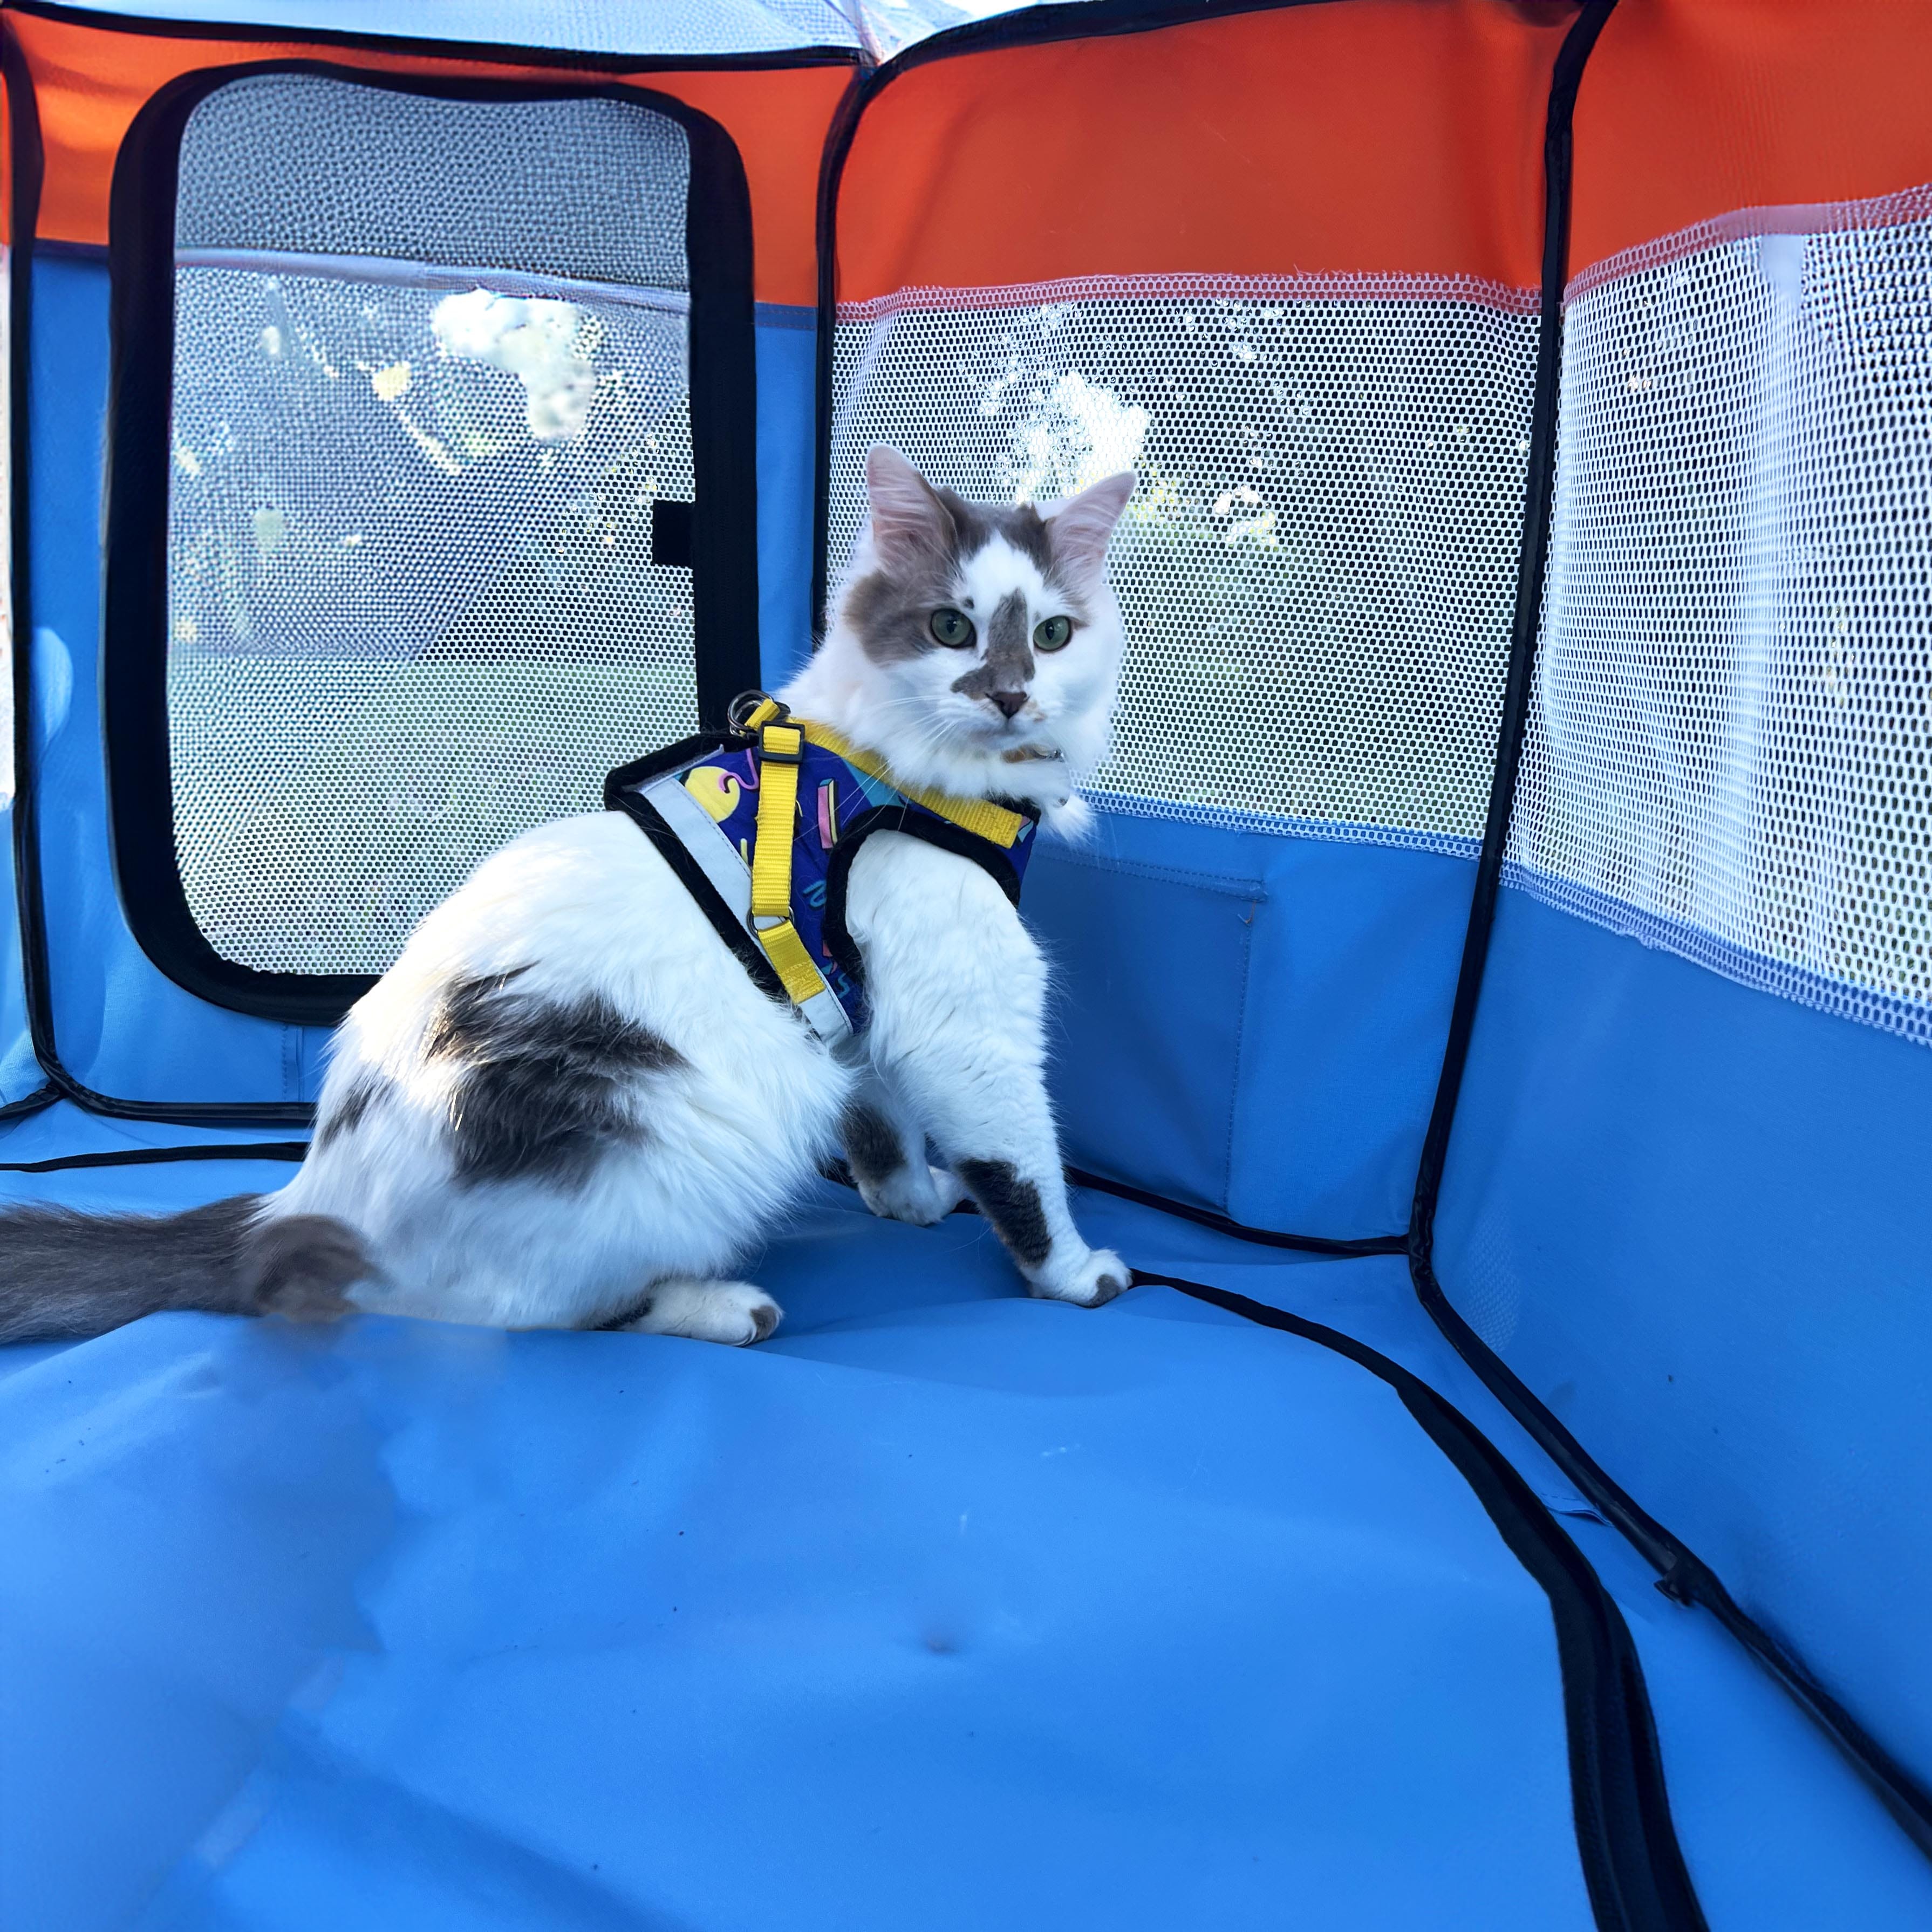 The Feline Fun House - Portable Cat Play Tent